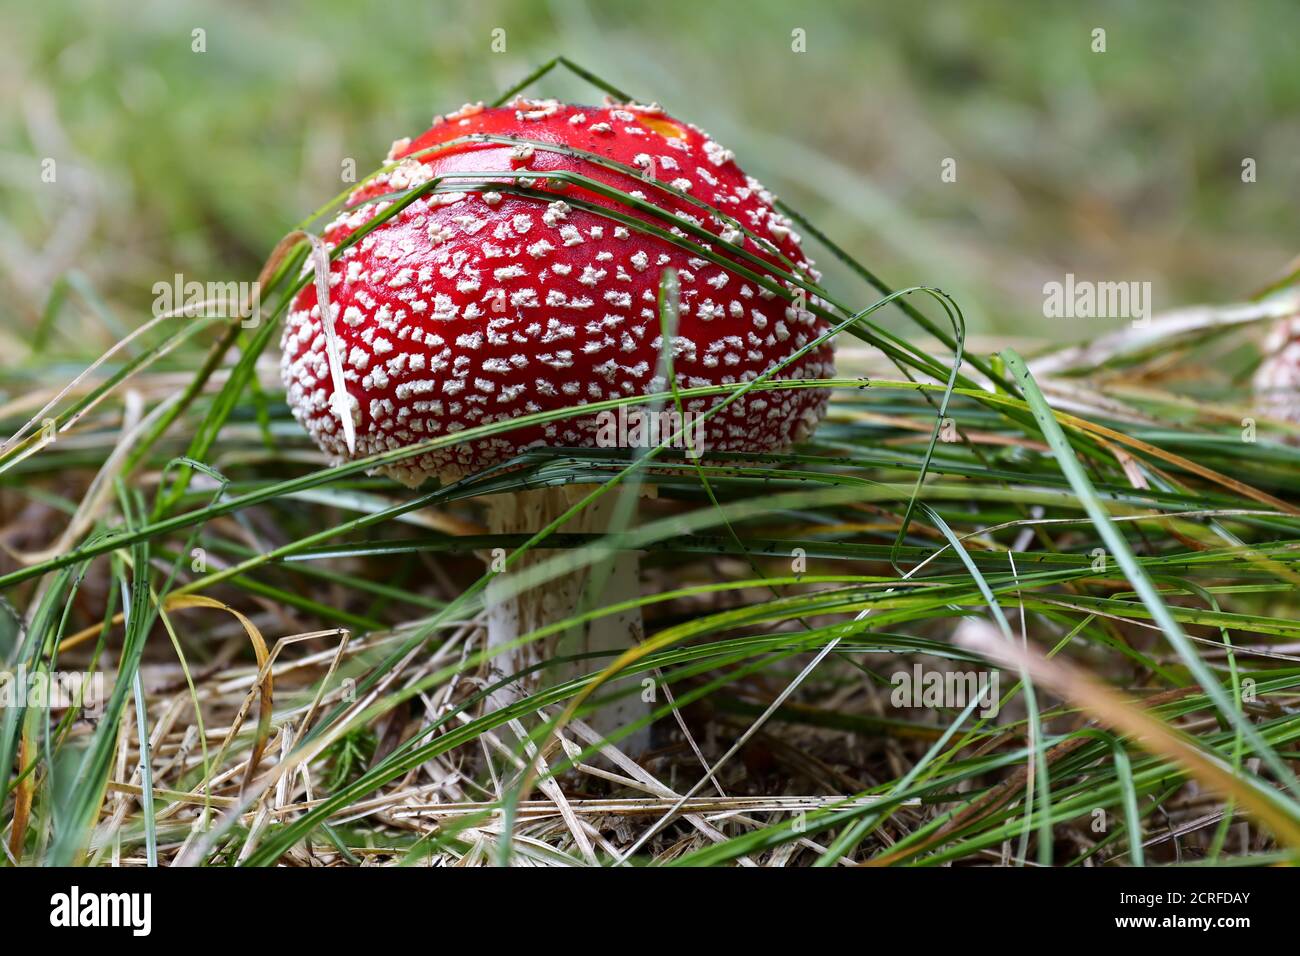 Roter Toadstool wächst im Gras - Amanita muscaria, giftiger Pilz Stockfoto